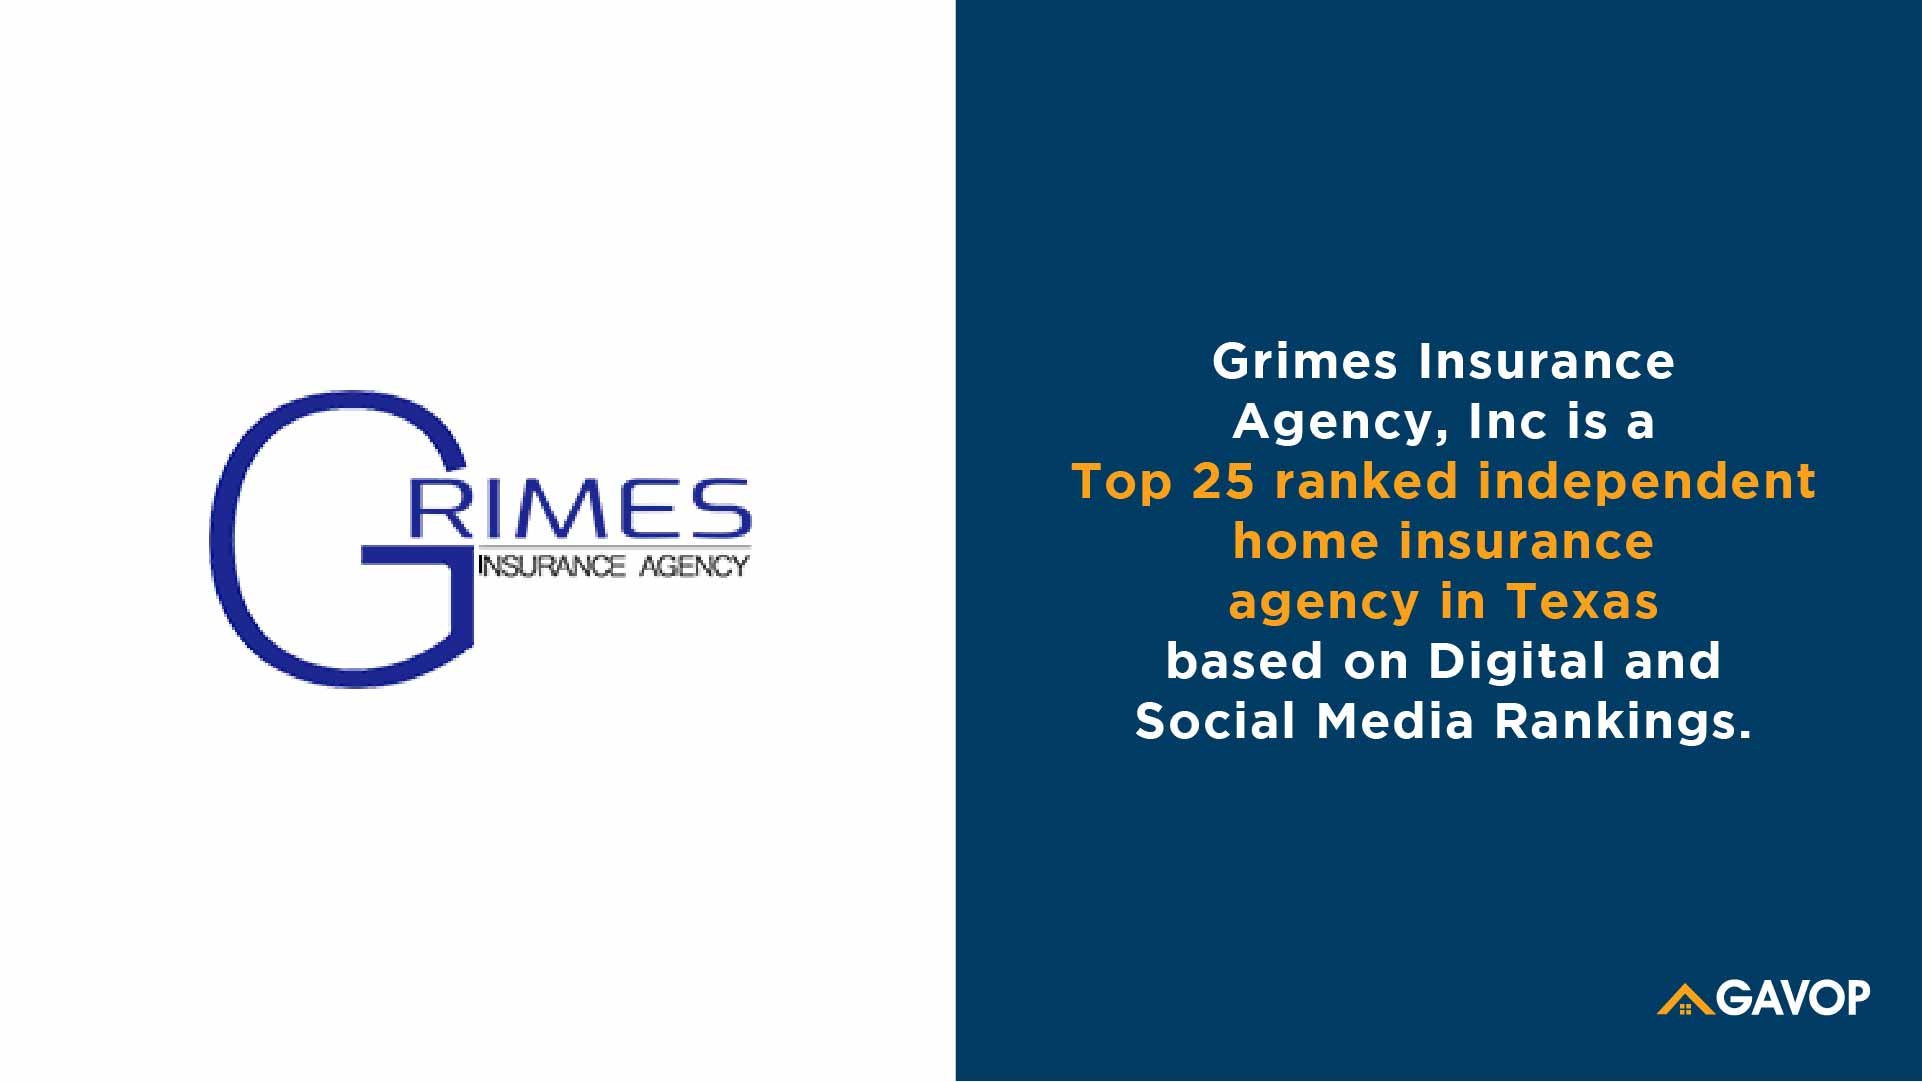 Grimes Insurance Agency, Inc